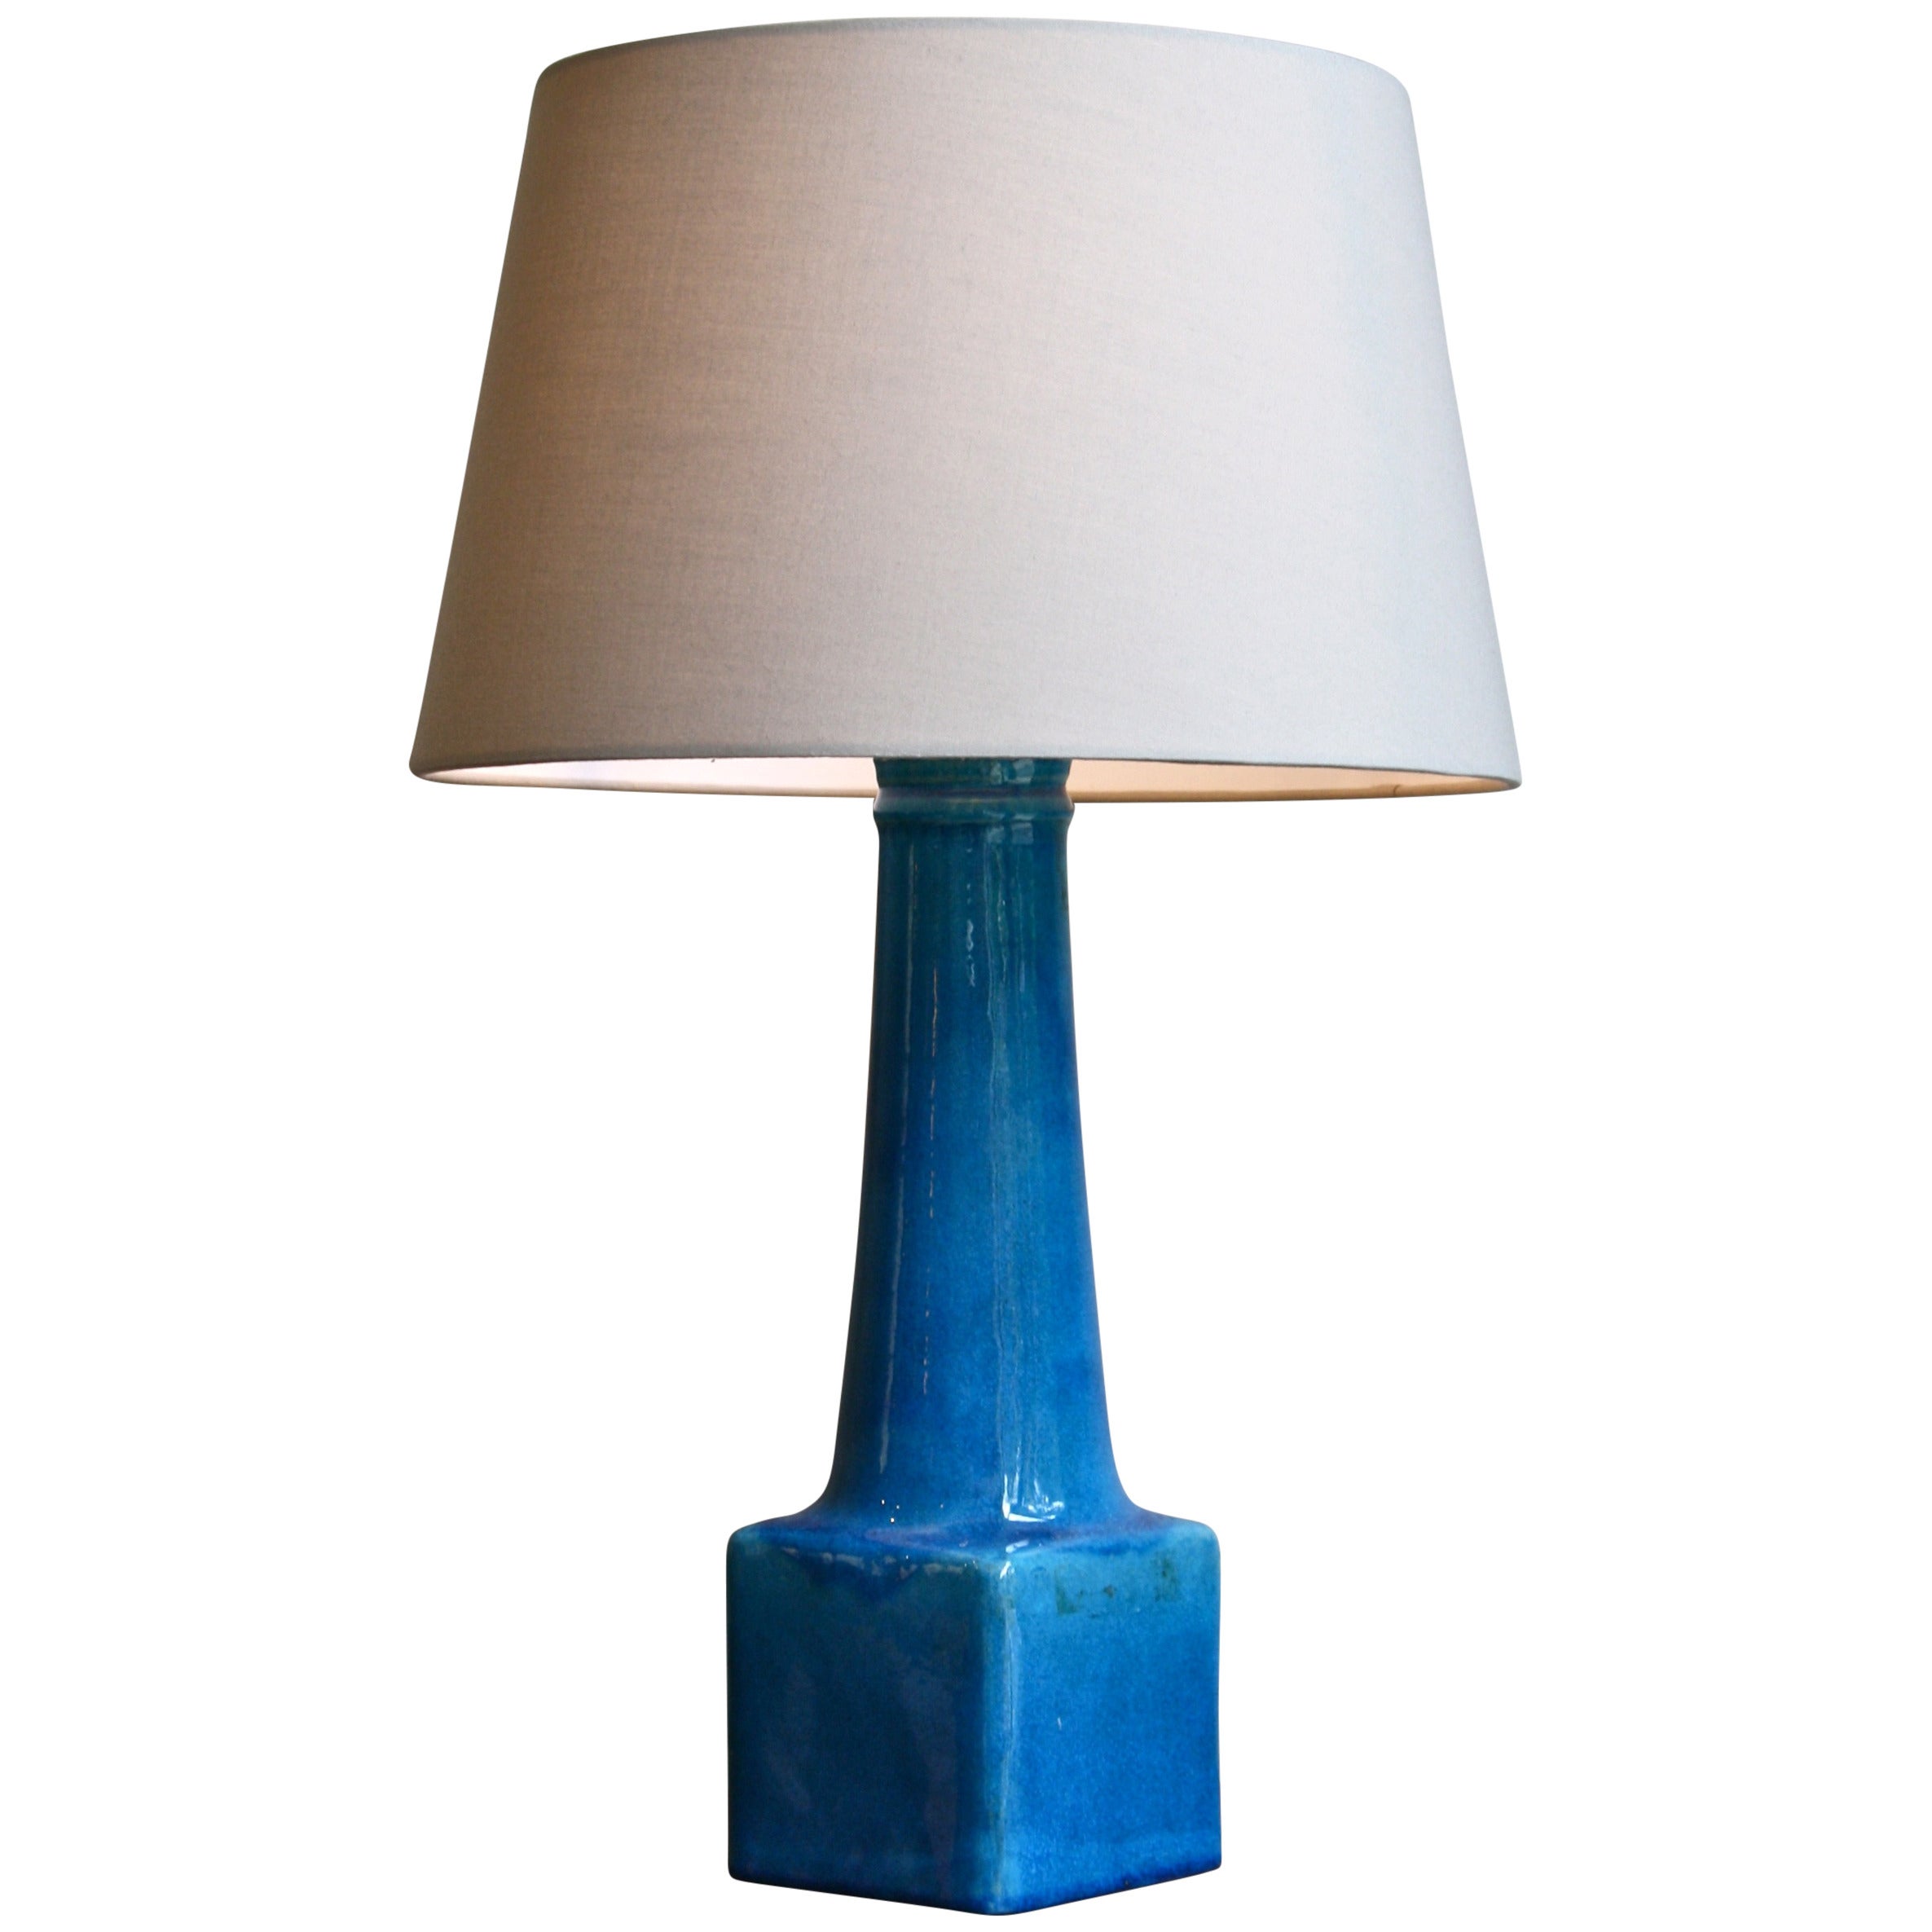 Herman A. Kähler Table Lamp